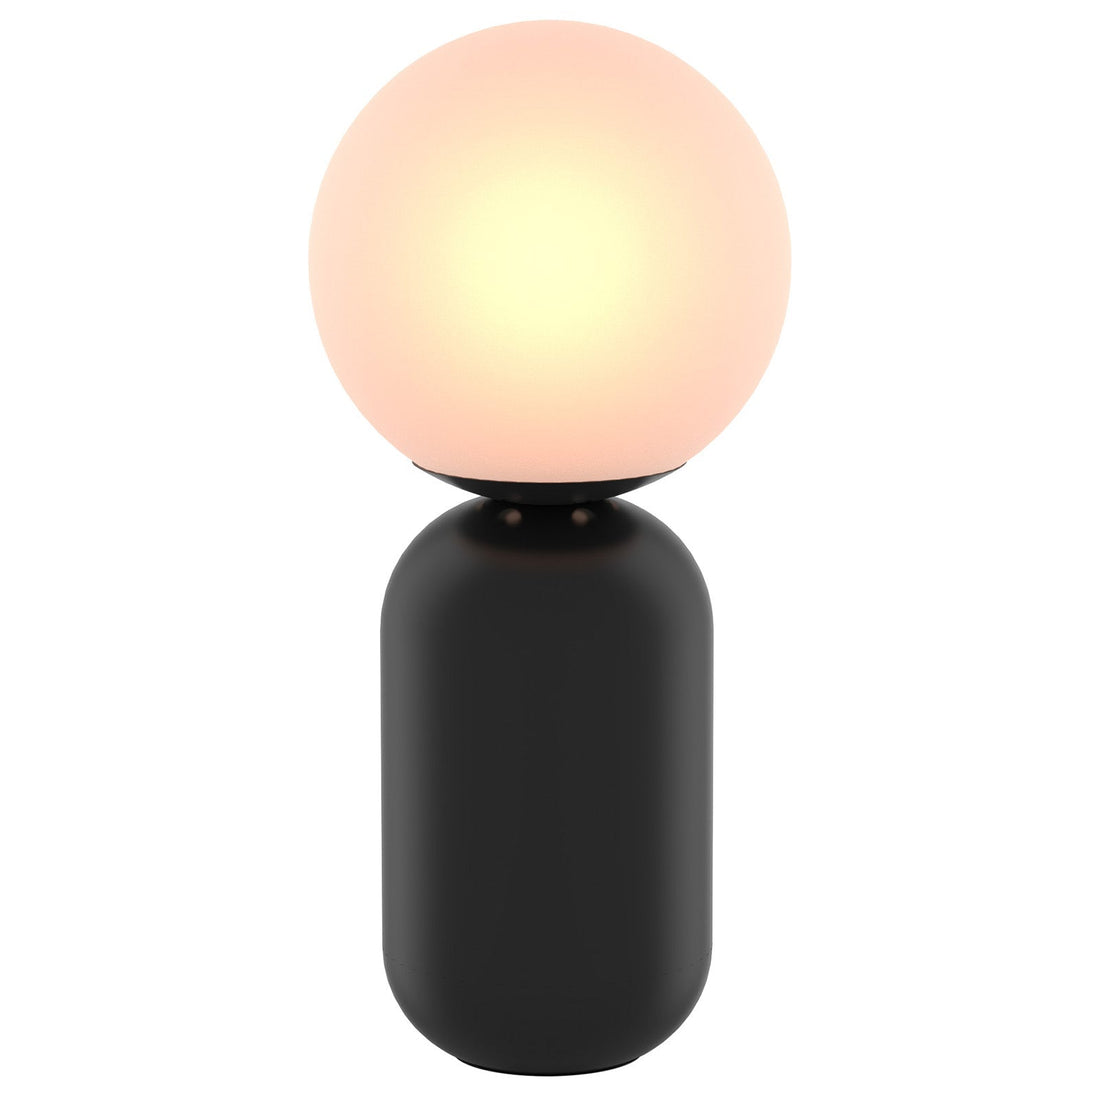 Luciano Opal Ball Table Lamp Mercator